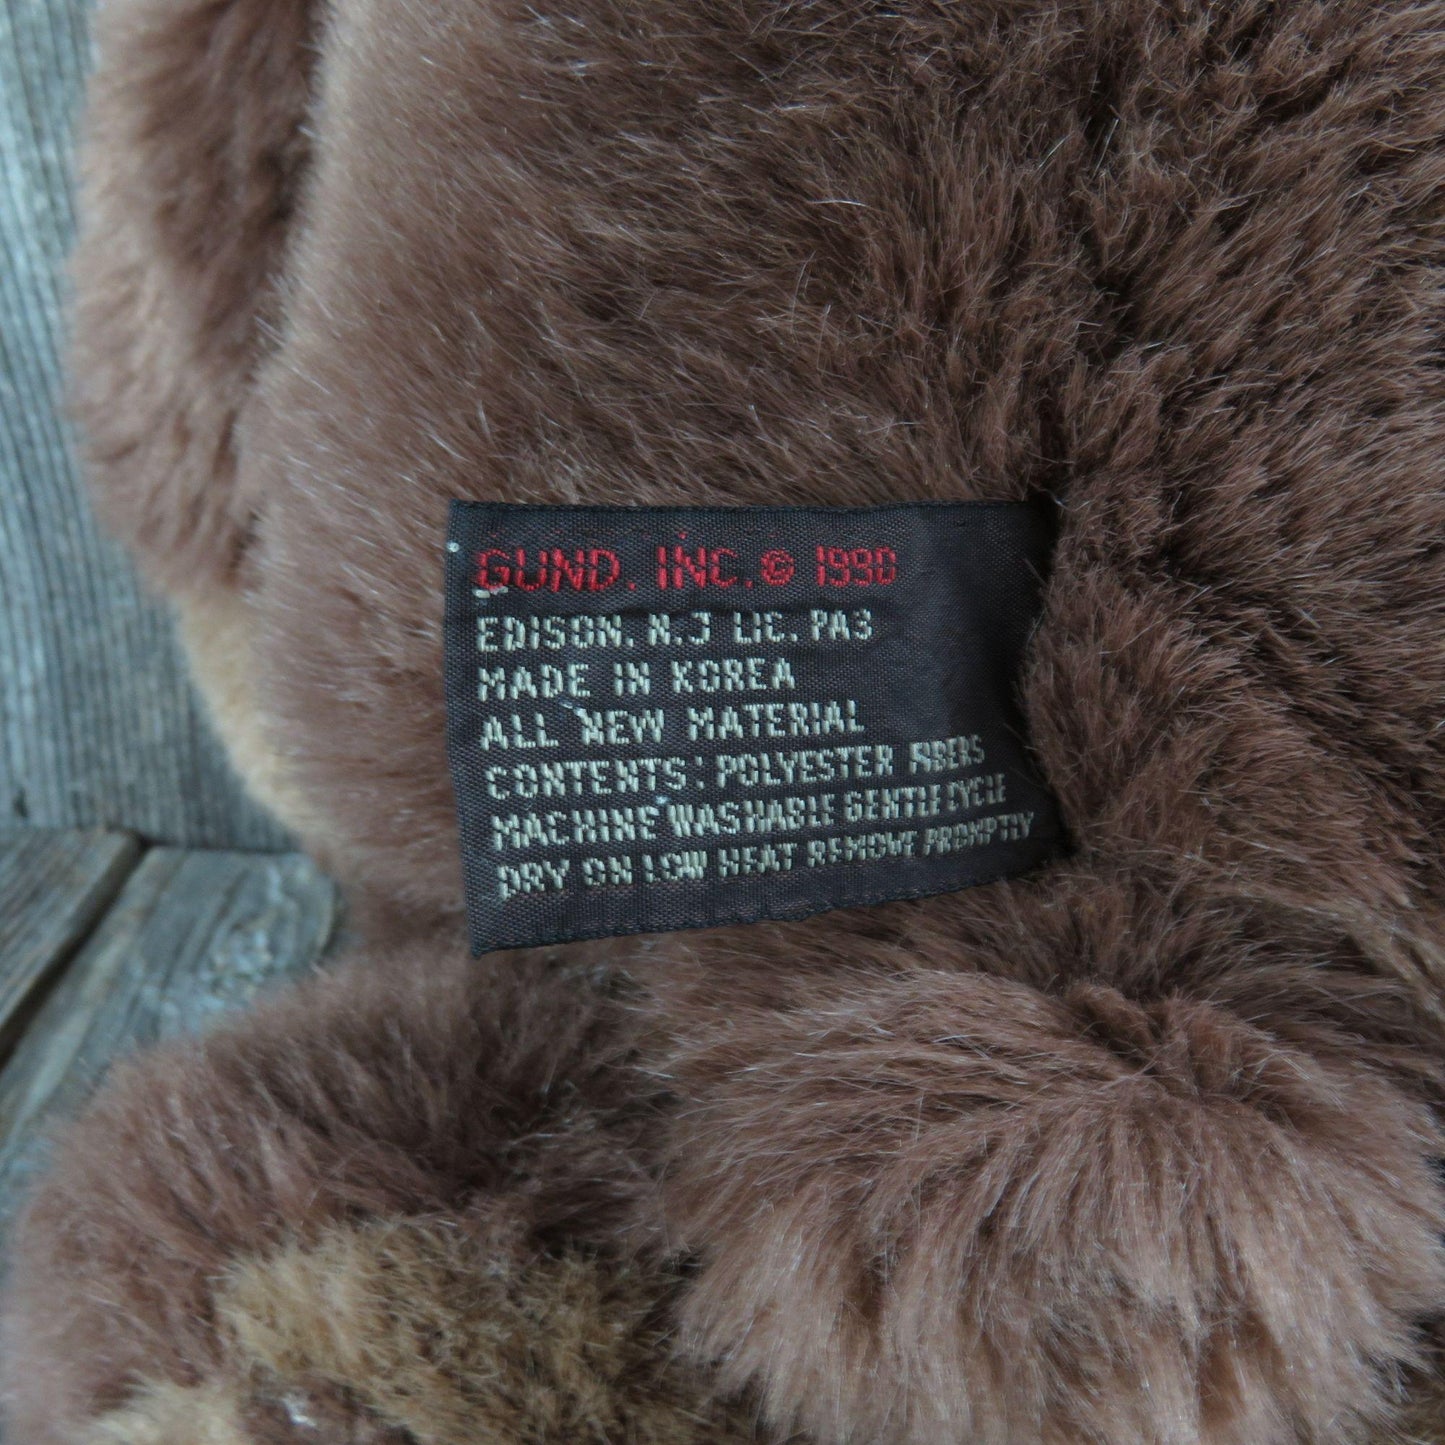 Vintage Teddy Bear Plush Brown Collector Classic Gund  Stuffed Animal 1990